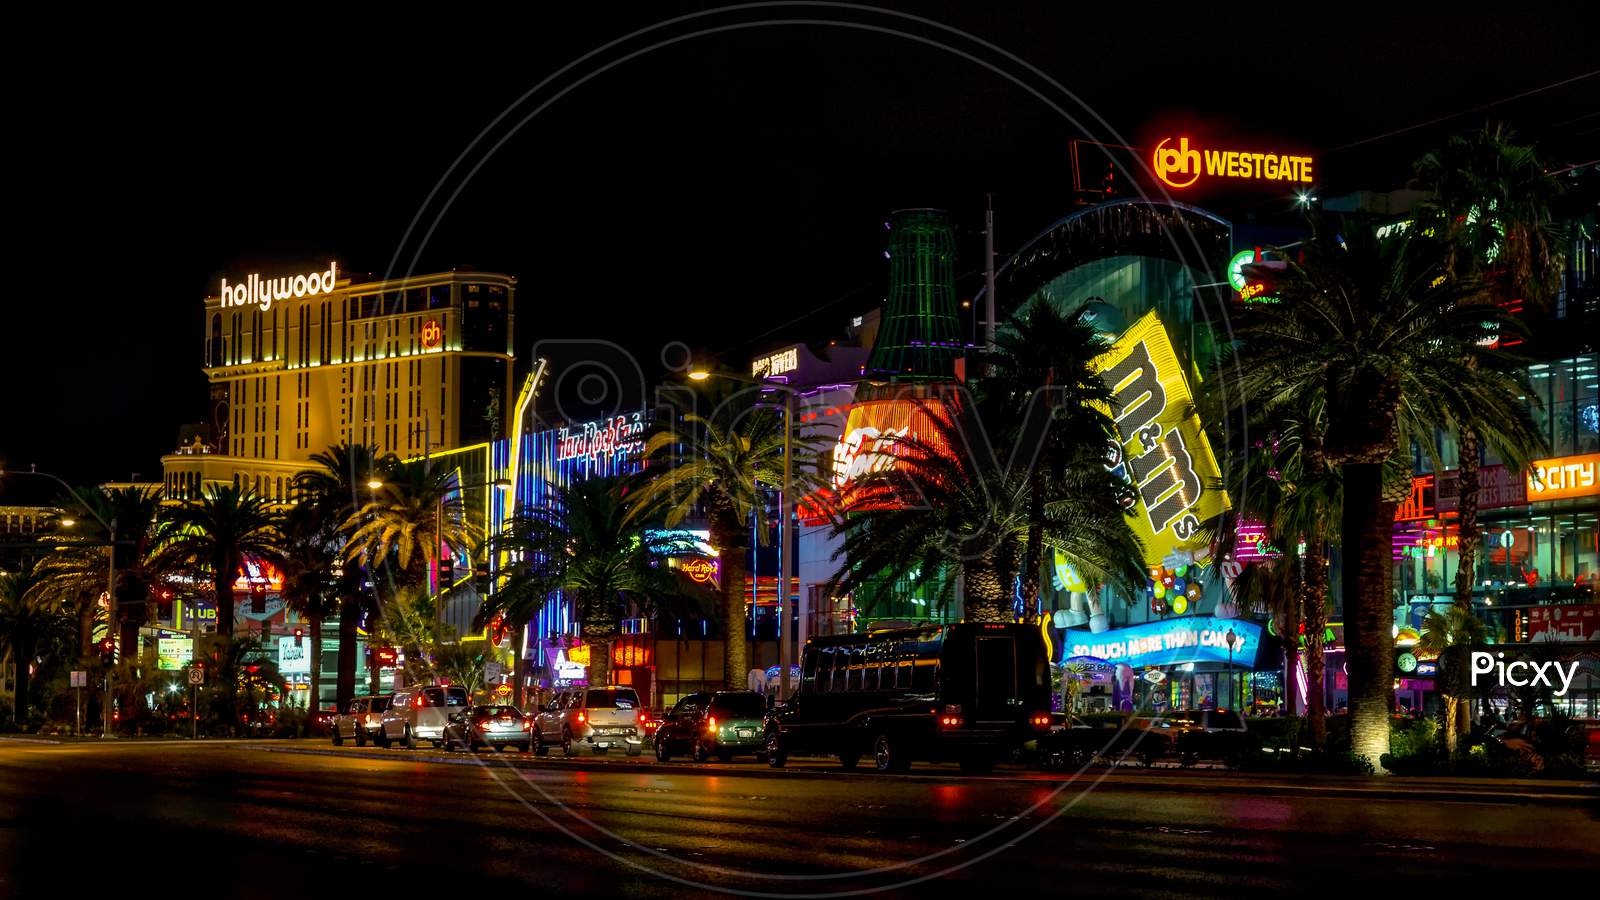 Night Scene Along The Strip In Las Vegas